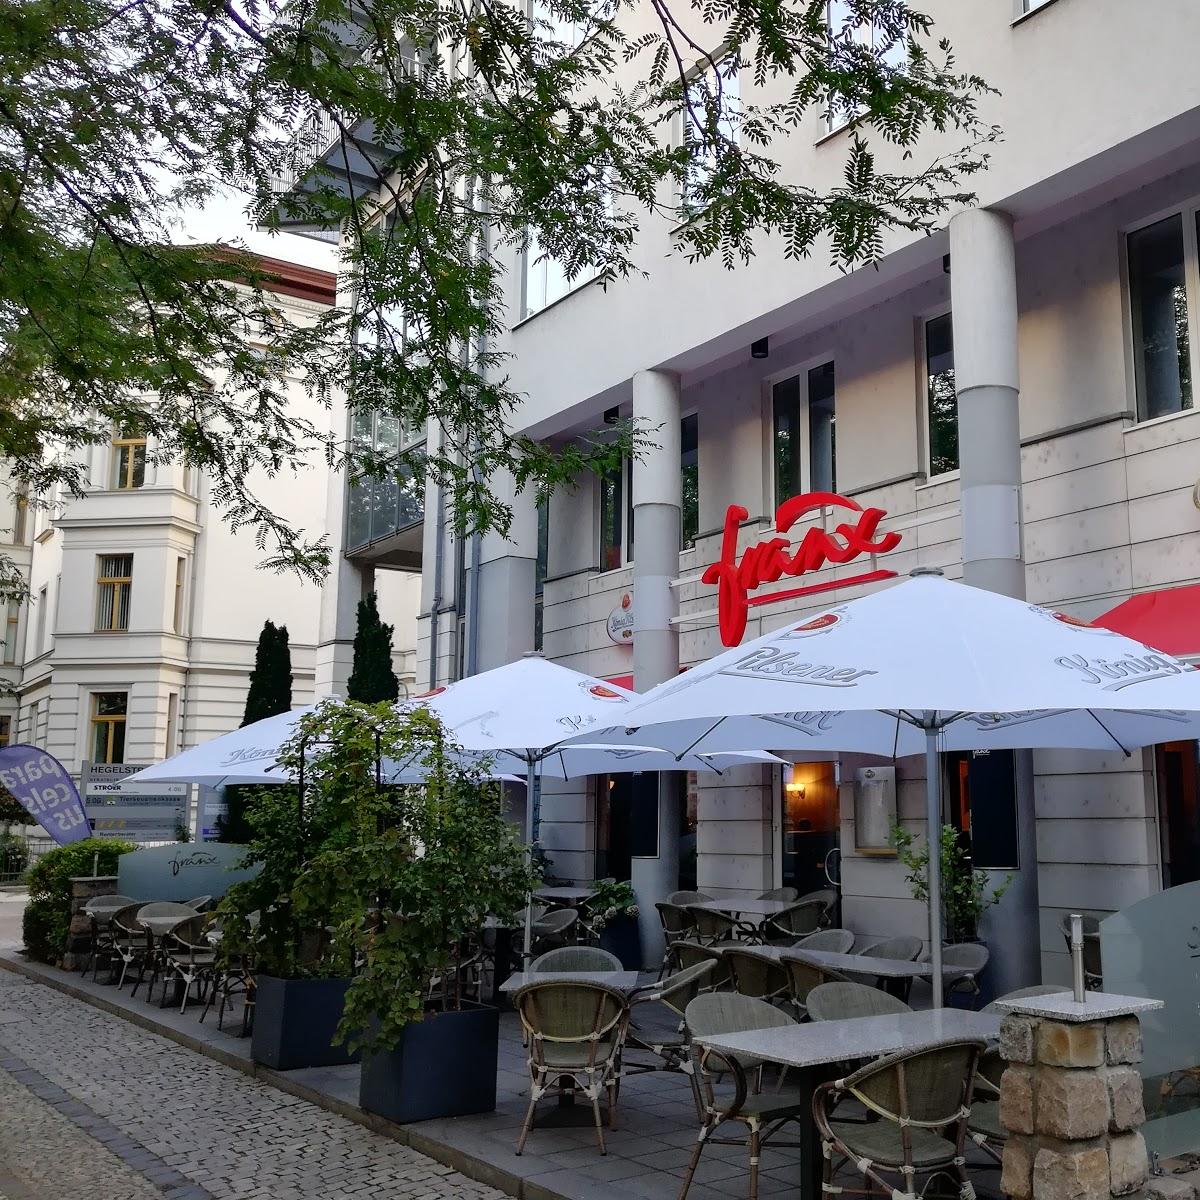 Restaurant "Franx" in  Magdeburg